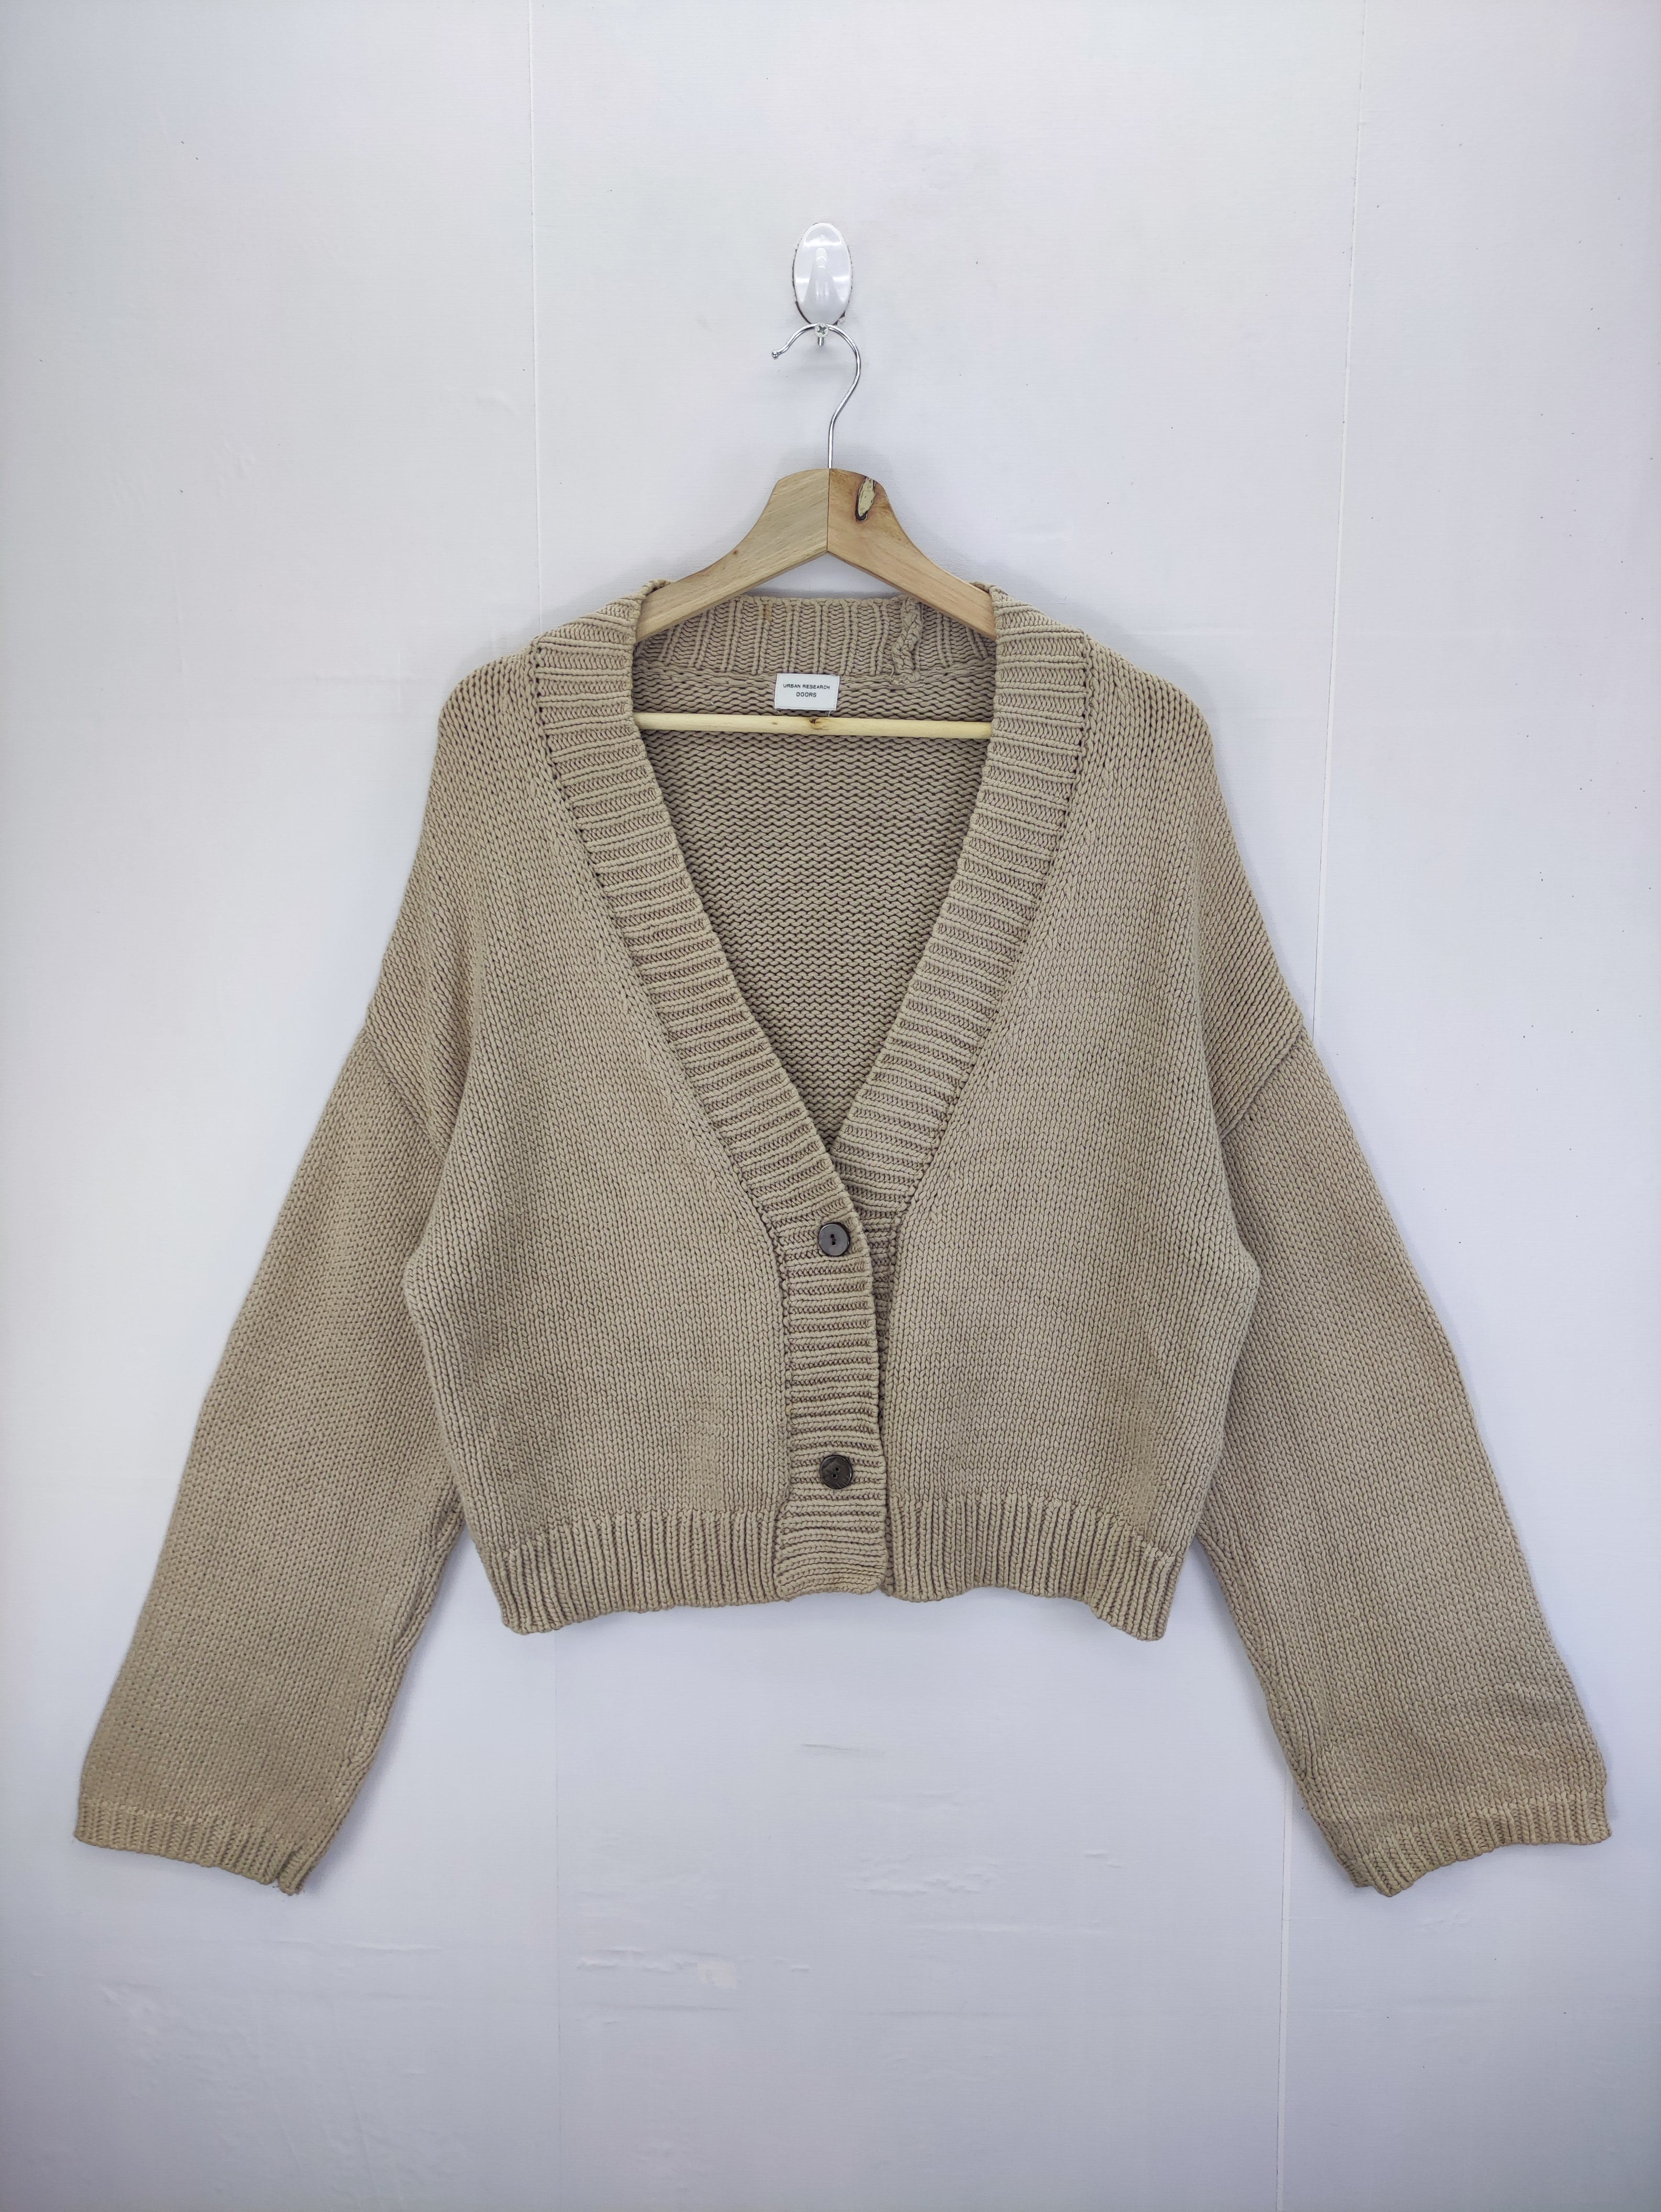 Urban Research Doors - Vintage Urban Research Cardigan Knit Sweater - 1